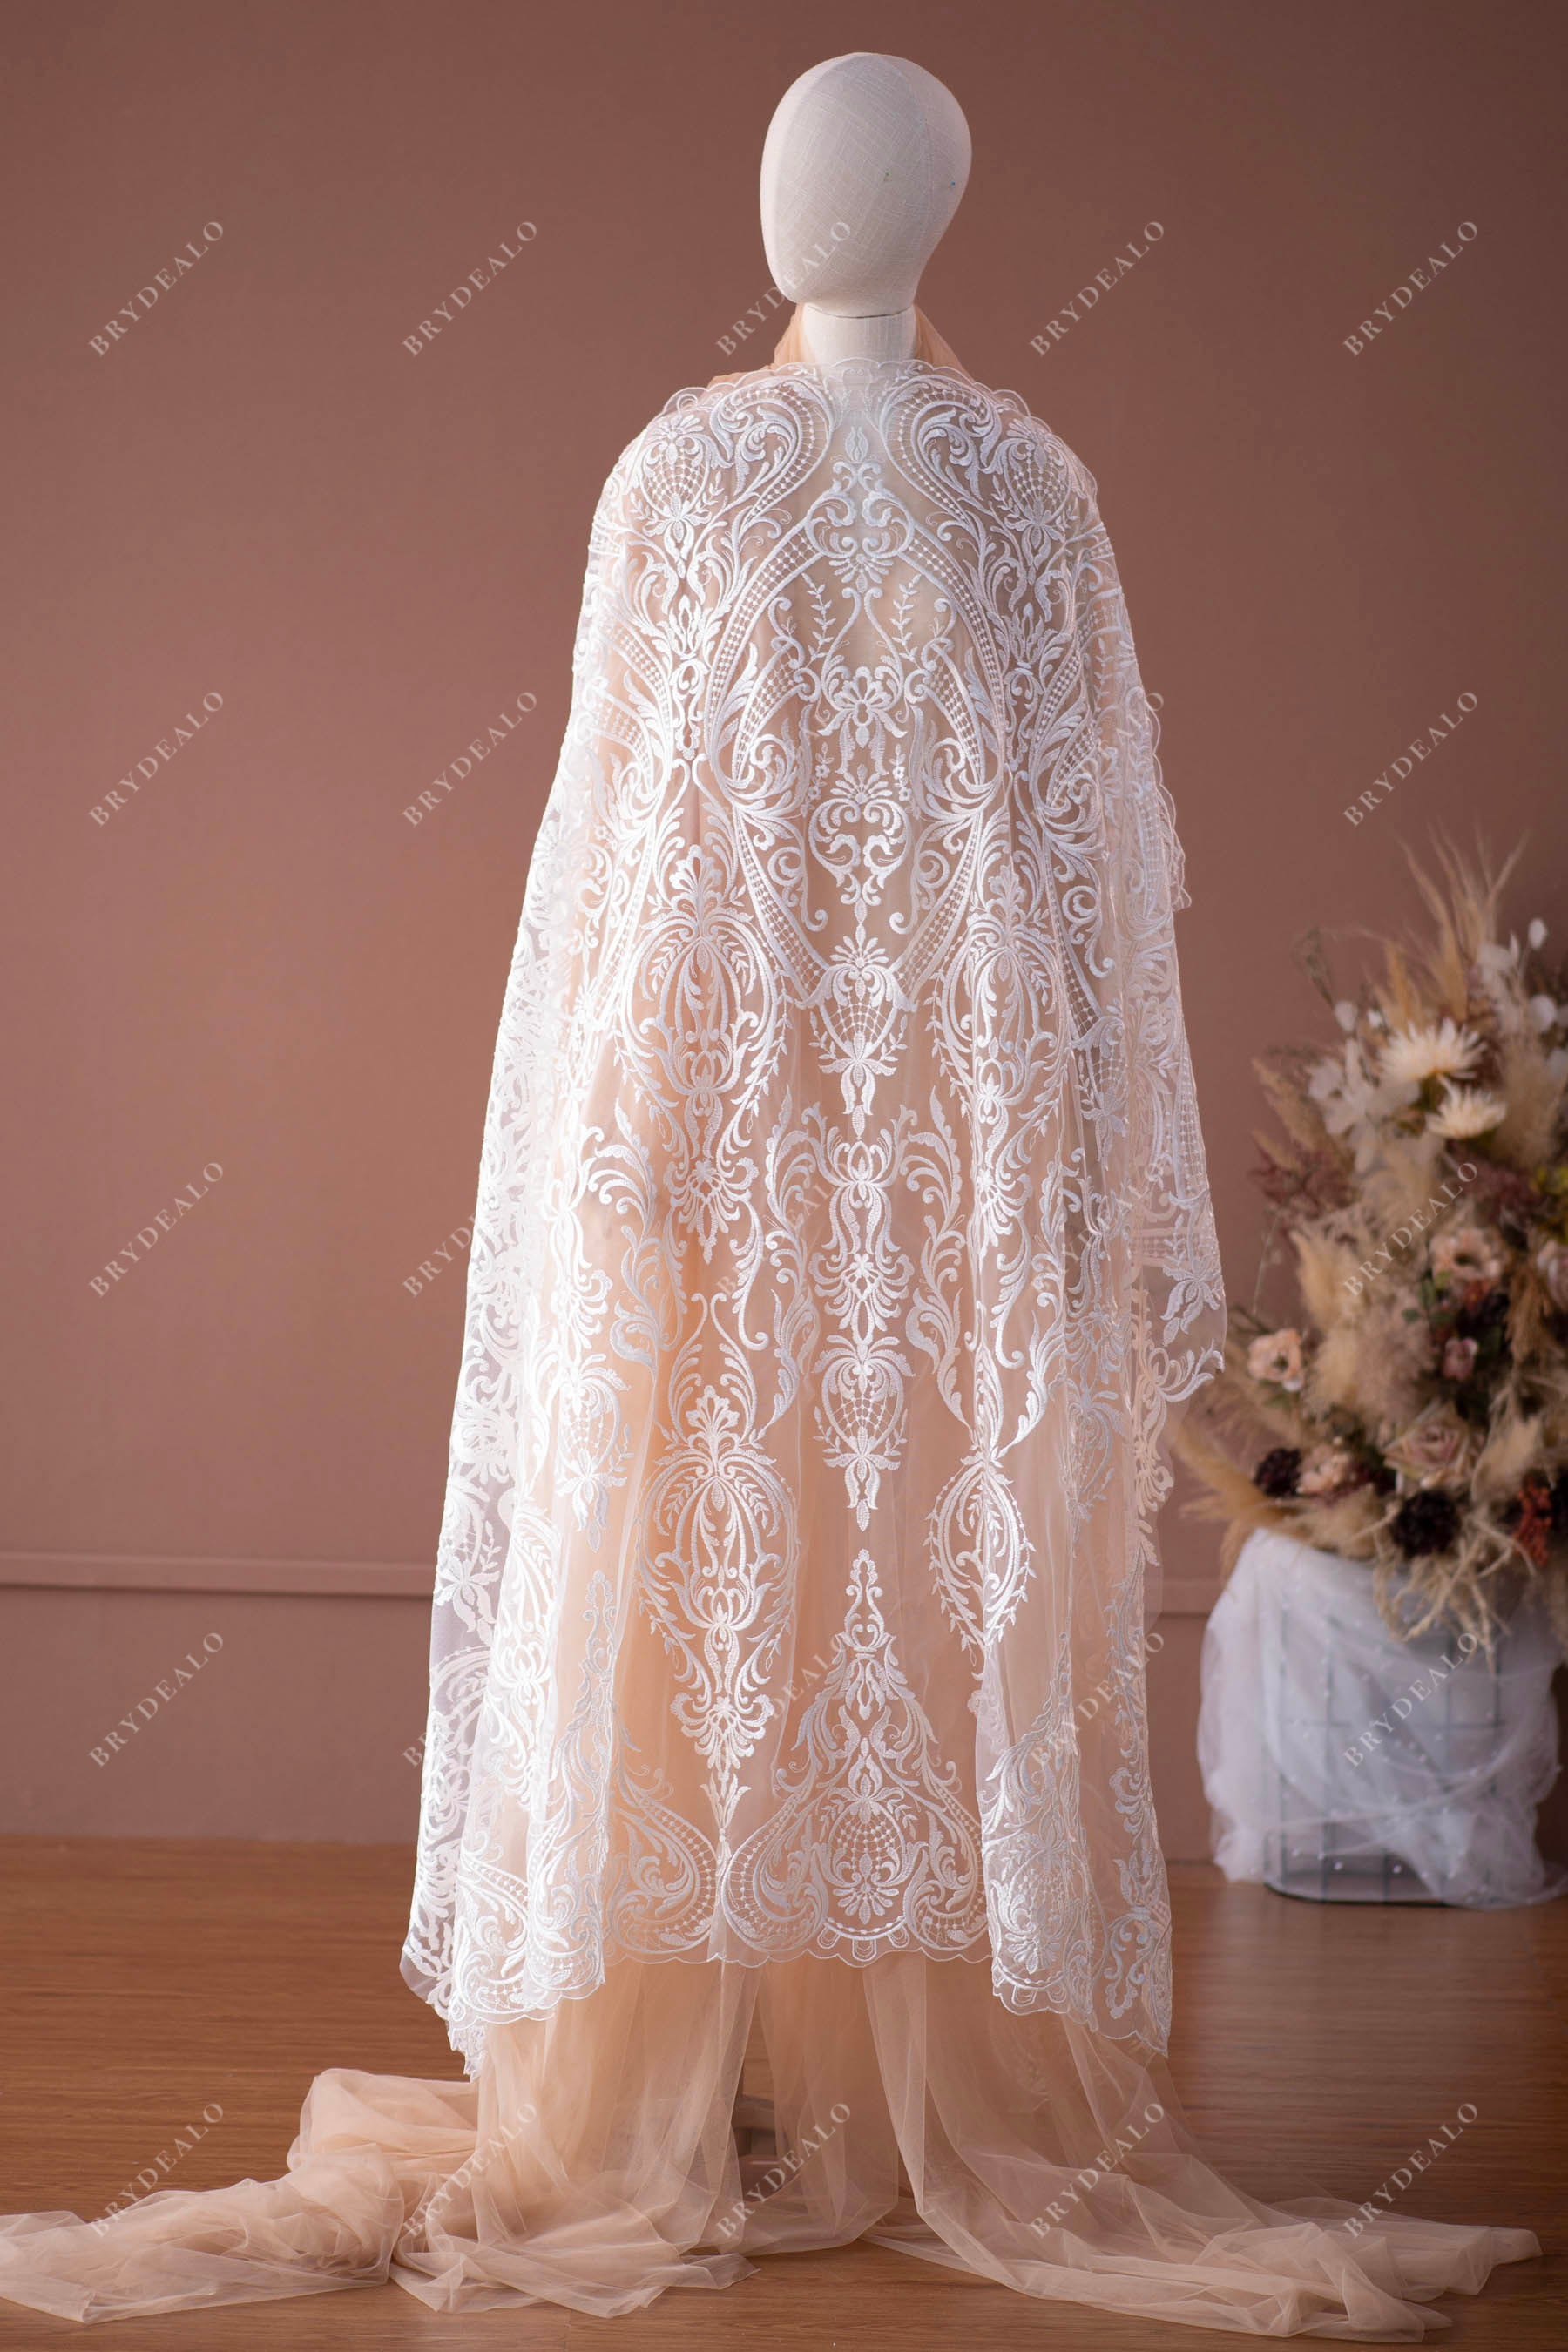 wholesale patterned symmetrical lace fabric